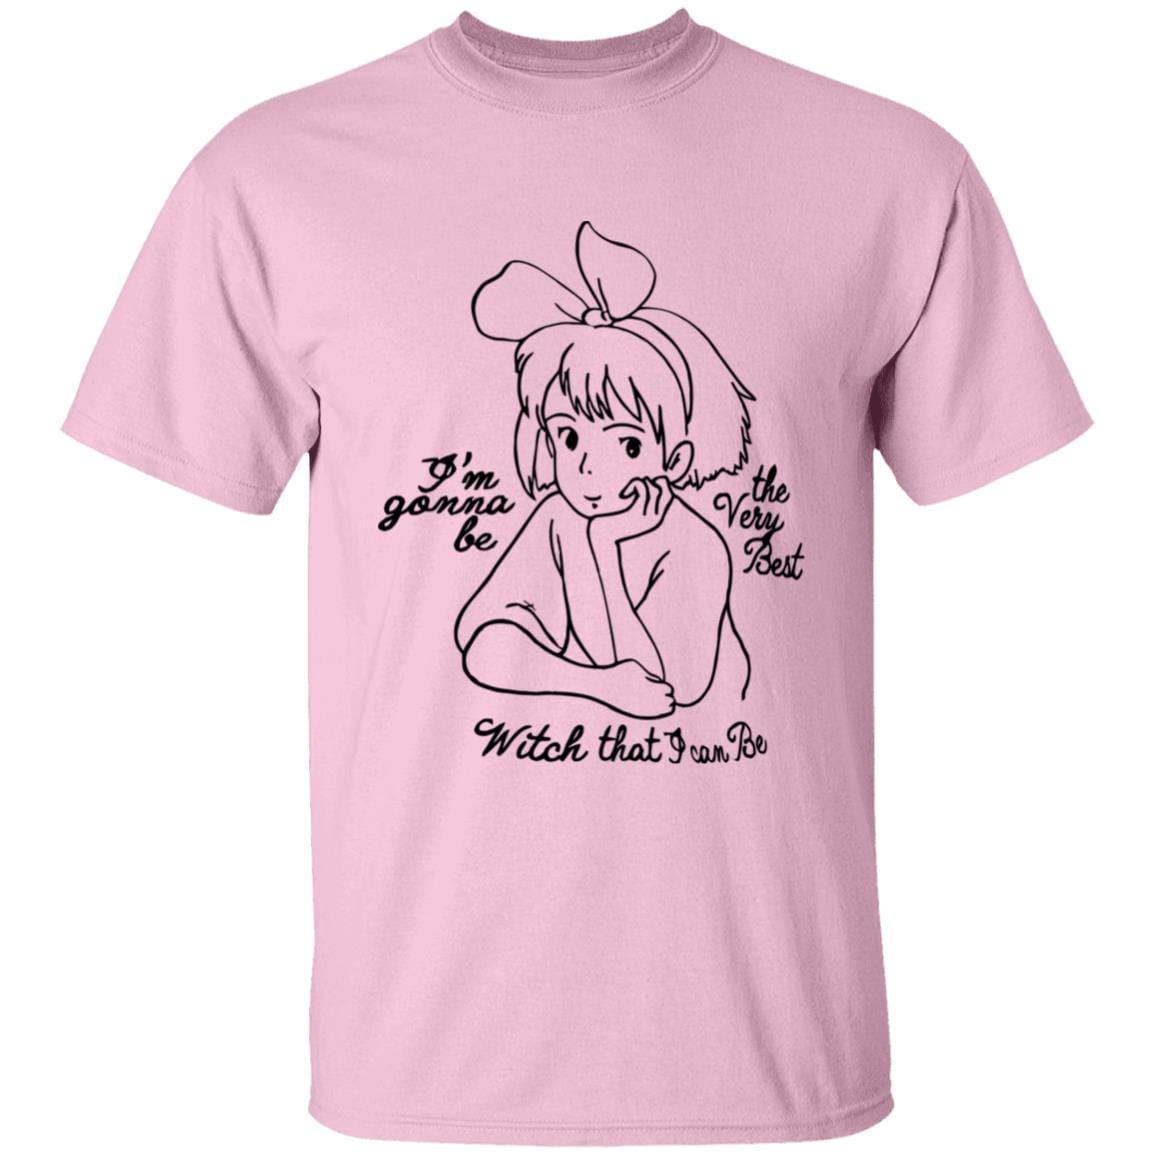 Kiki’s Delivery Service – Kiki the Best Witch T Shirt Unisex